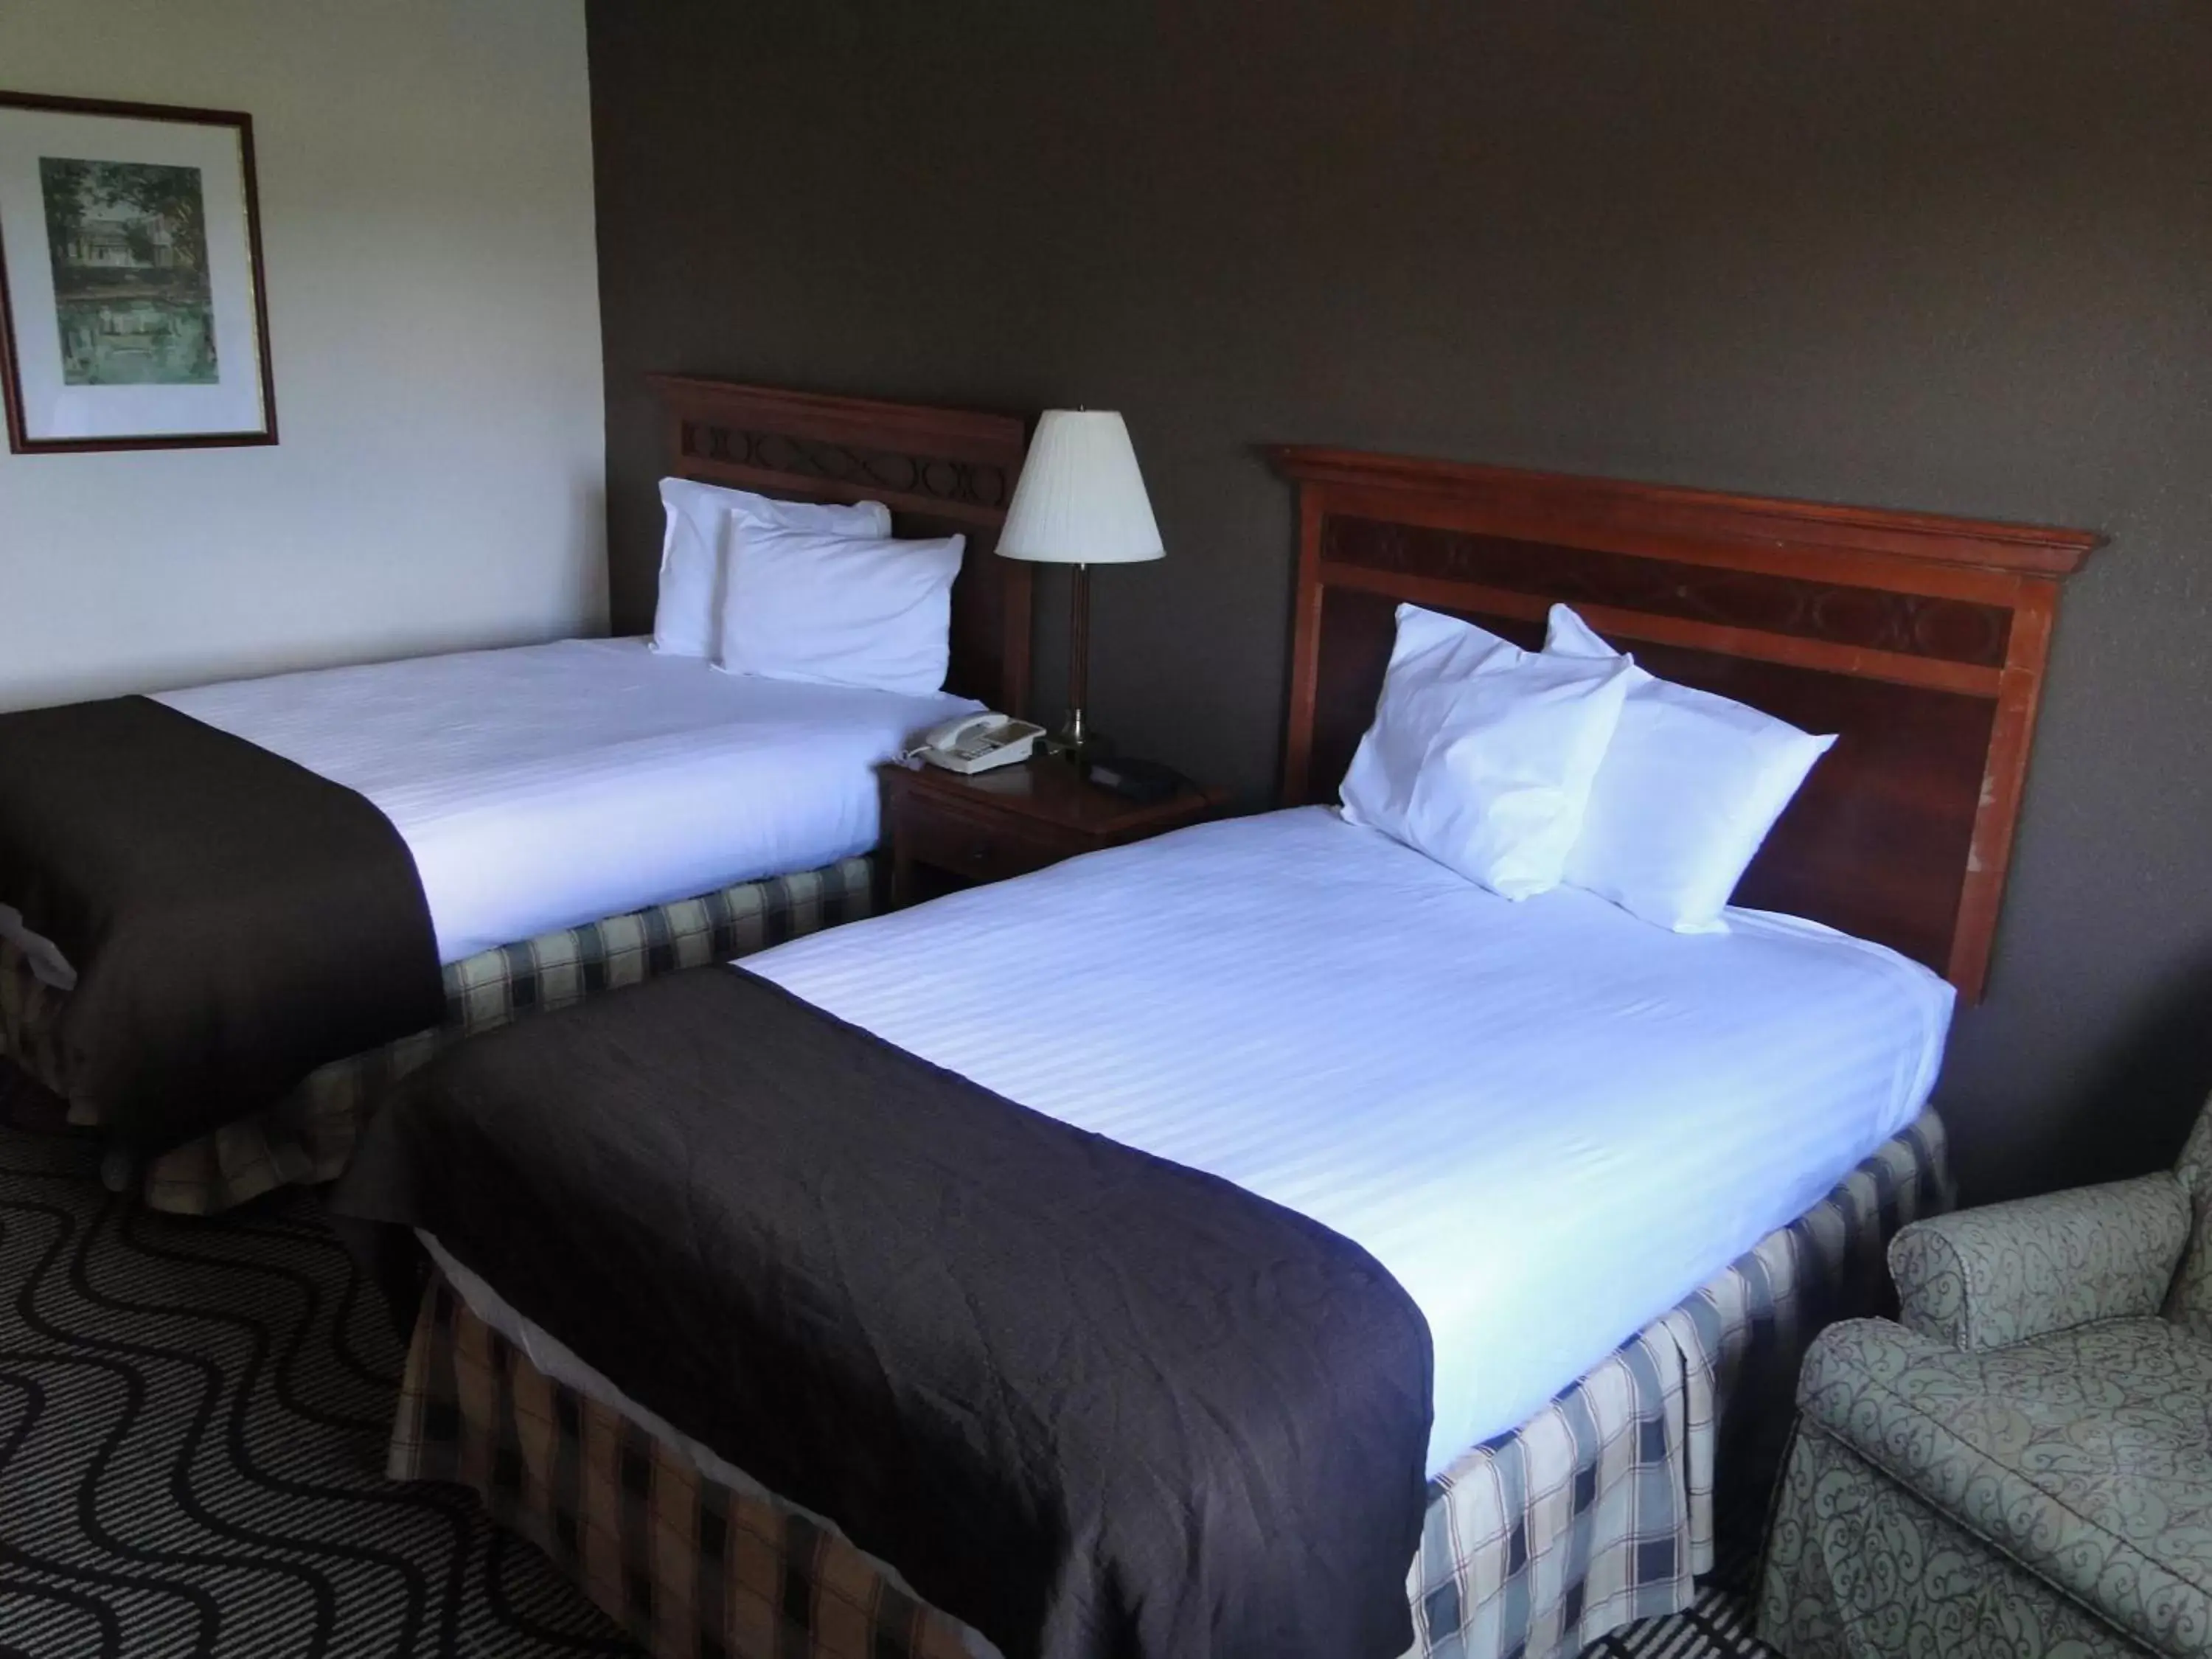 Bed, Room Photo in Oscoda Lakeside Hotel